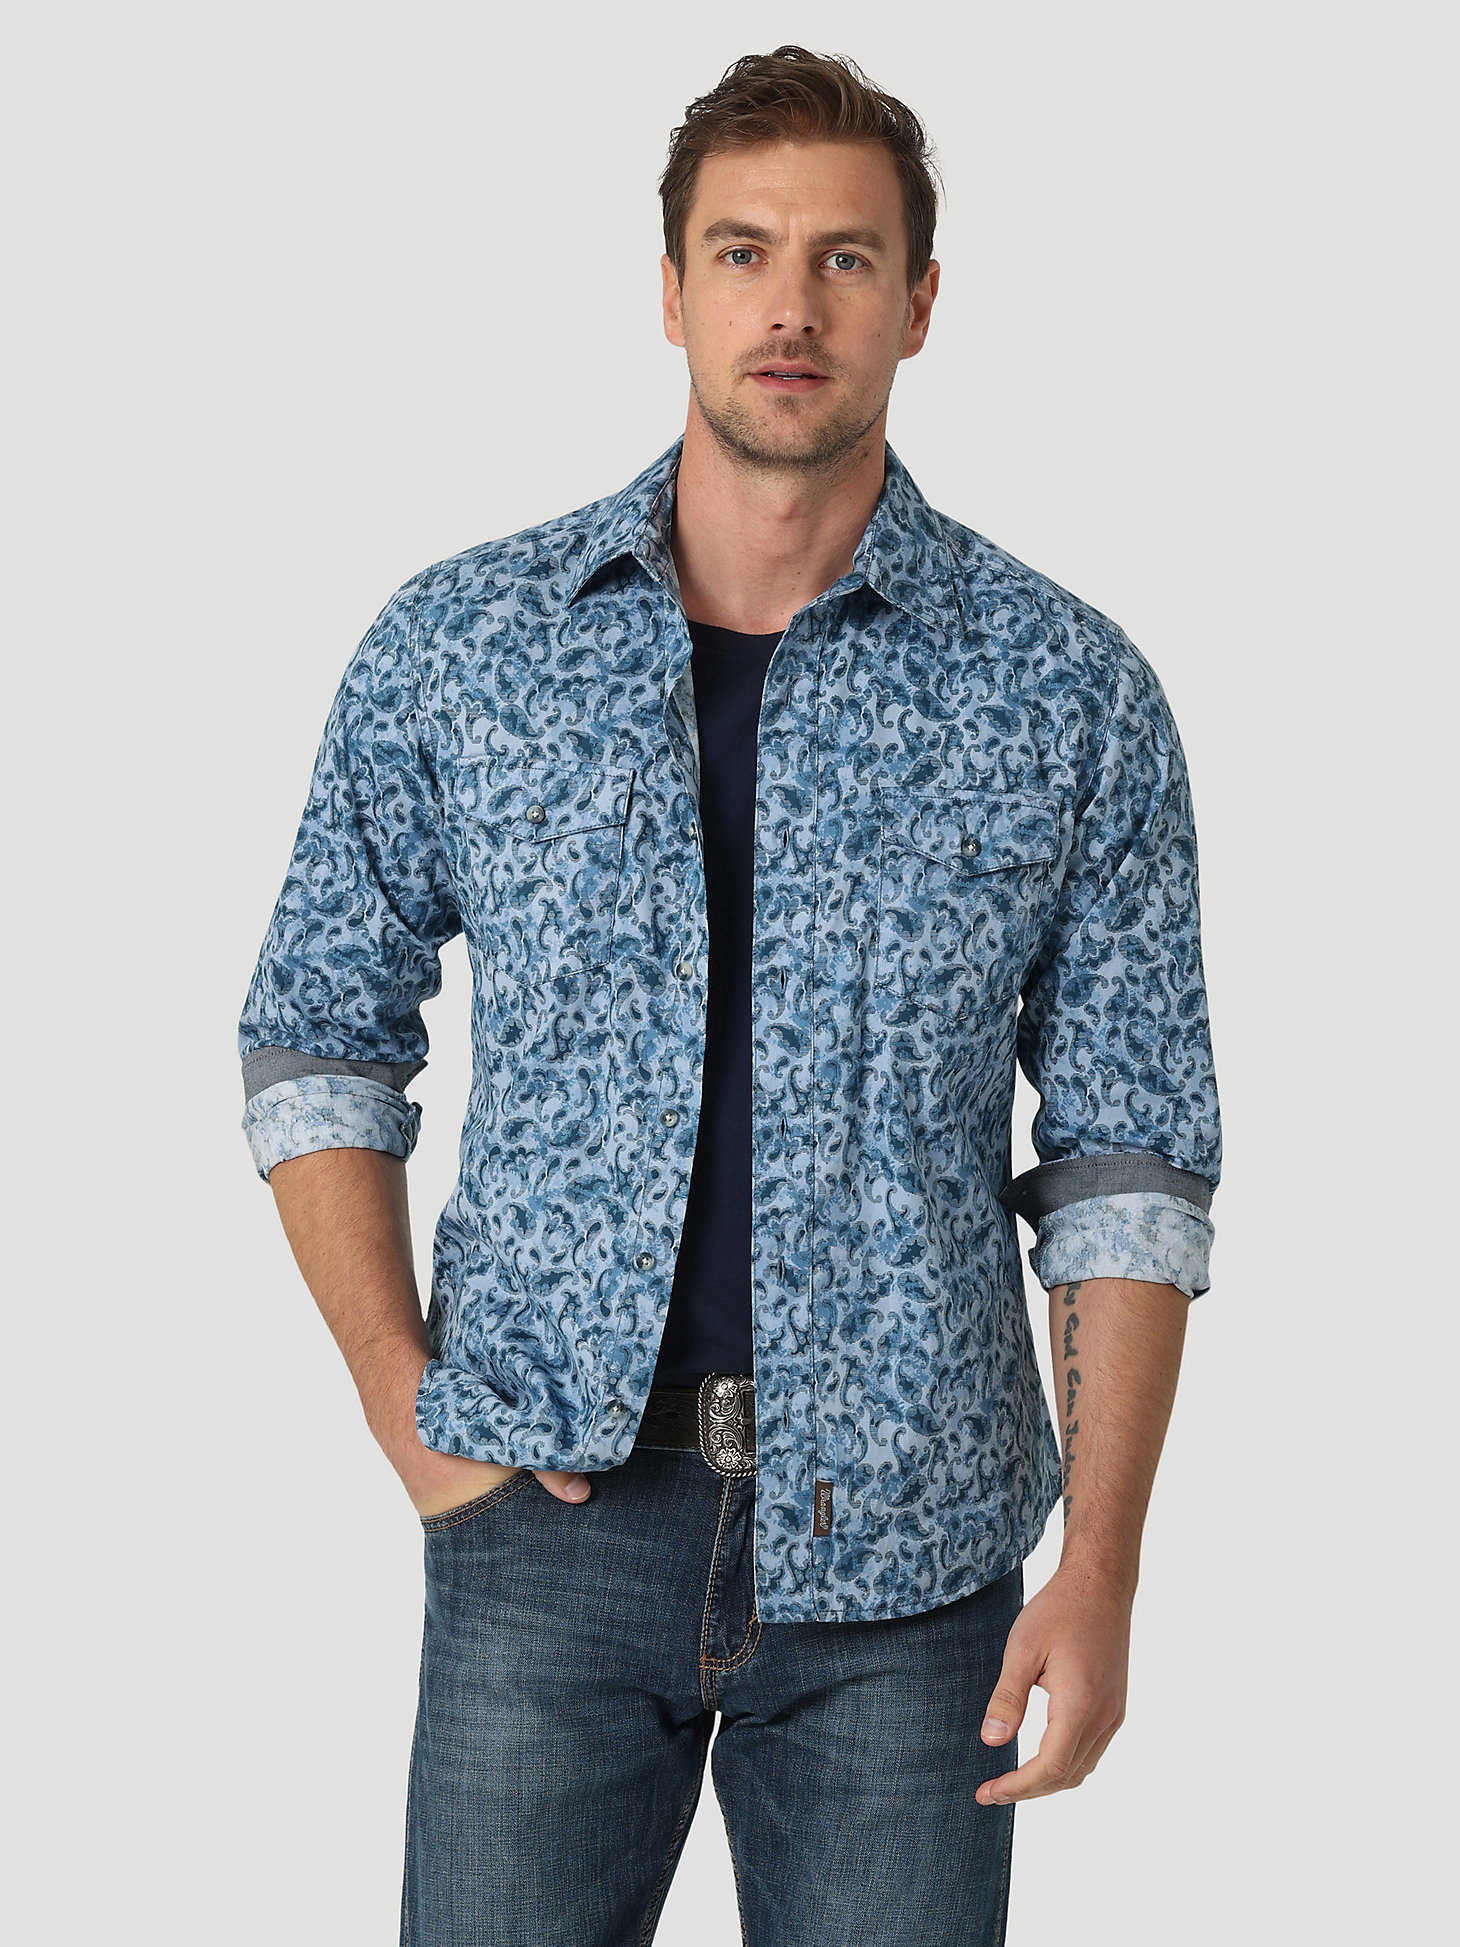 Men's Wrangler Retro® Premium Long Sleeve Button-Down Print Shirt in Washed Paisley main view